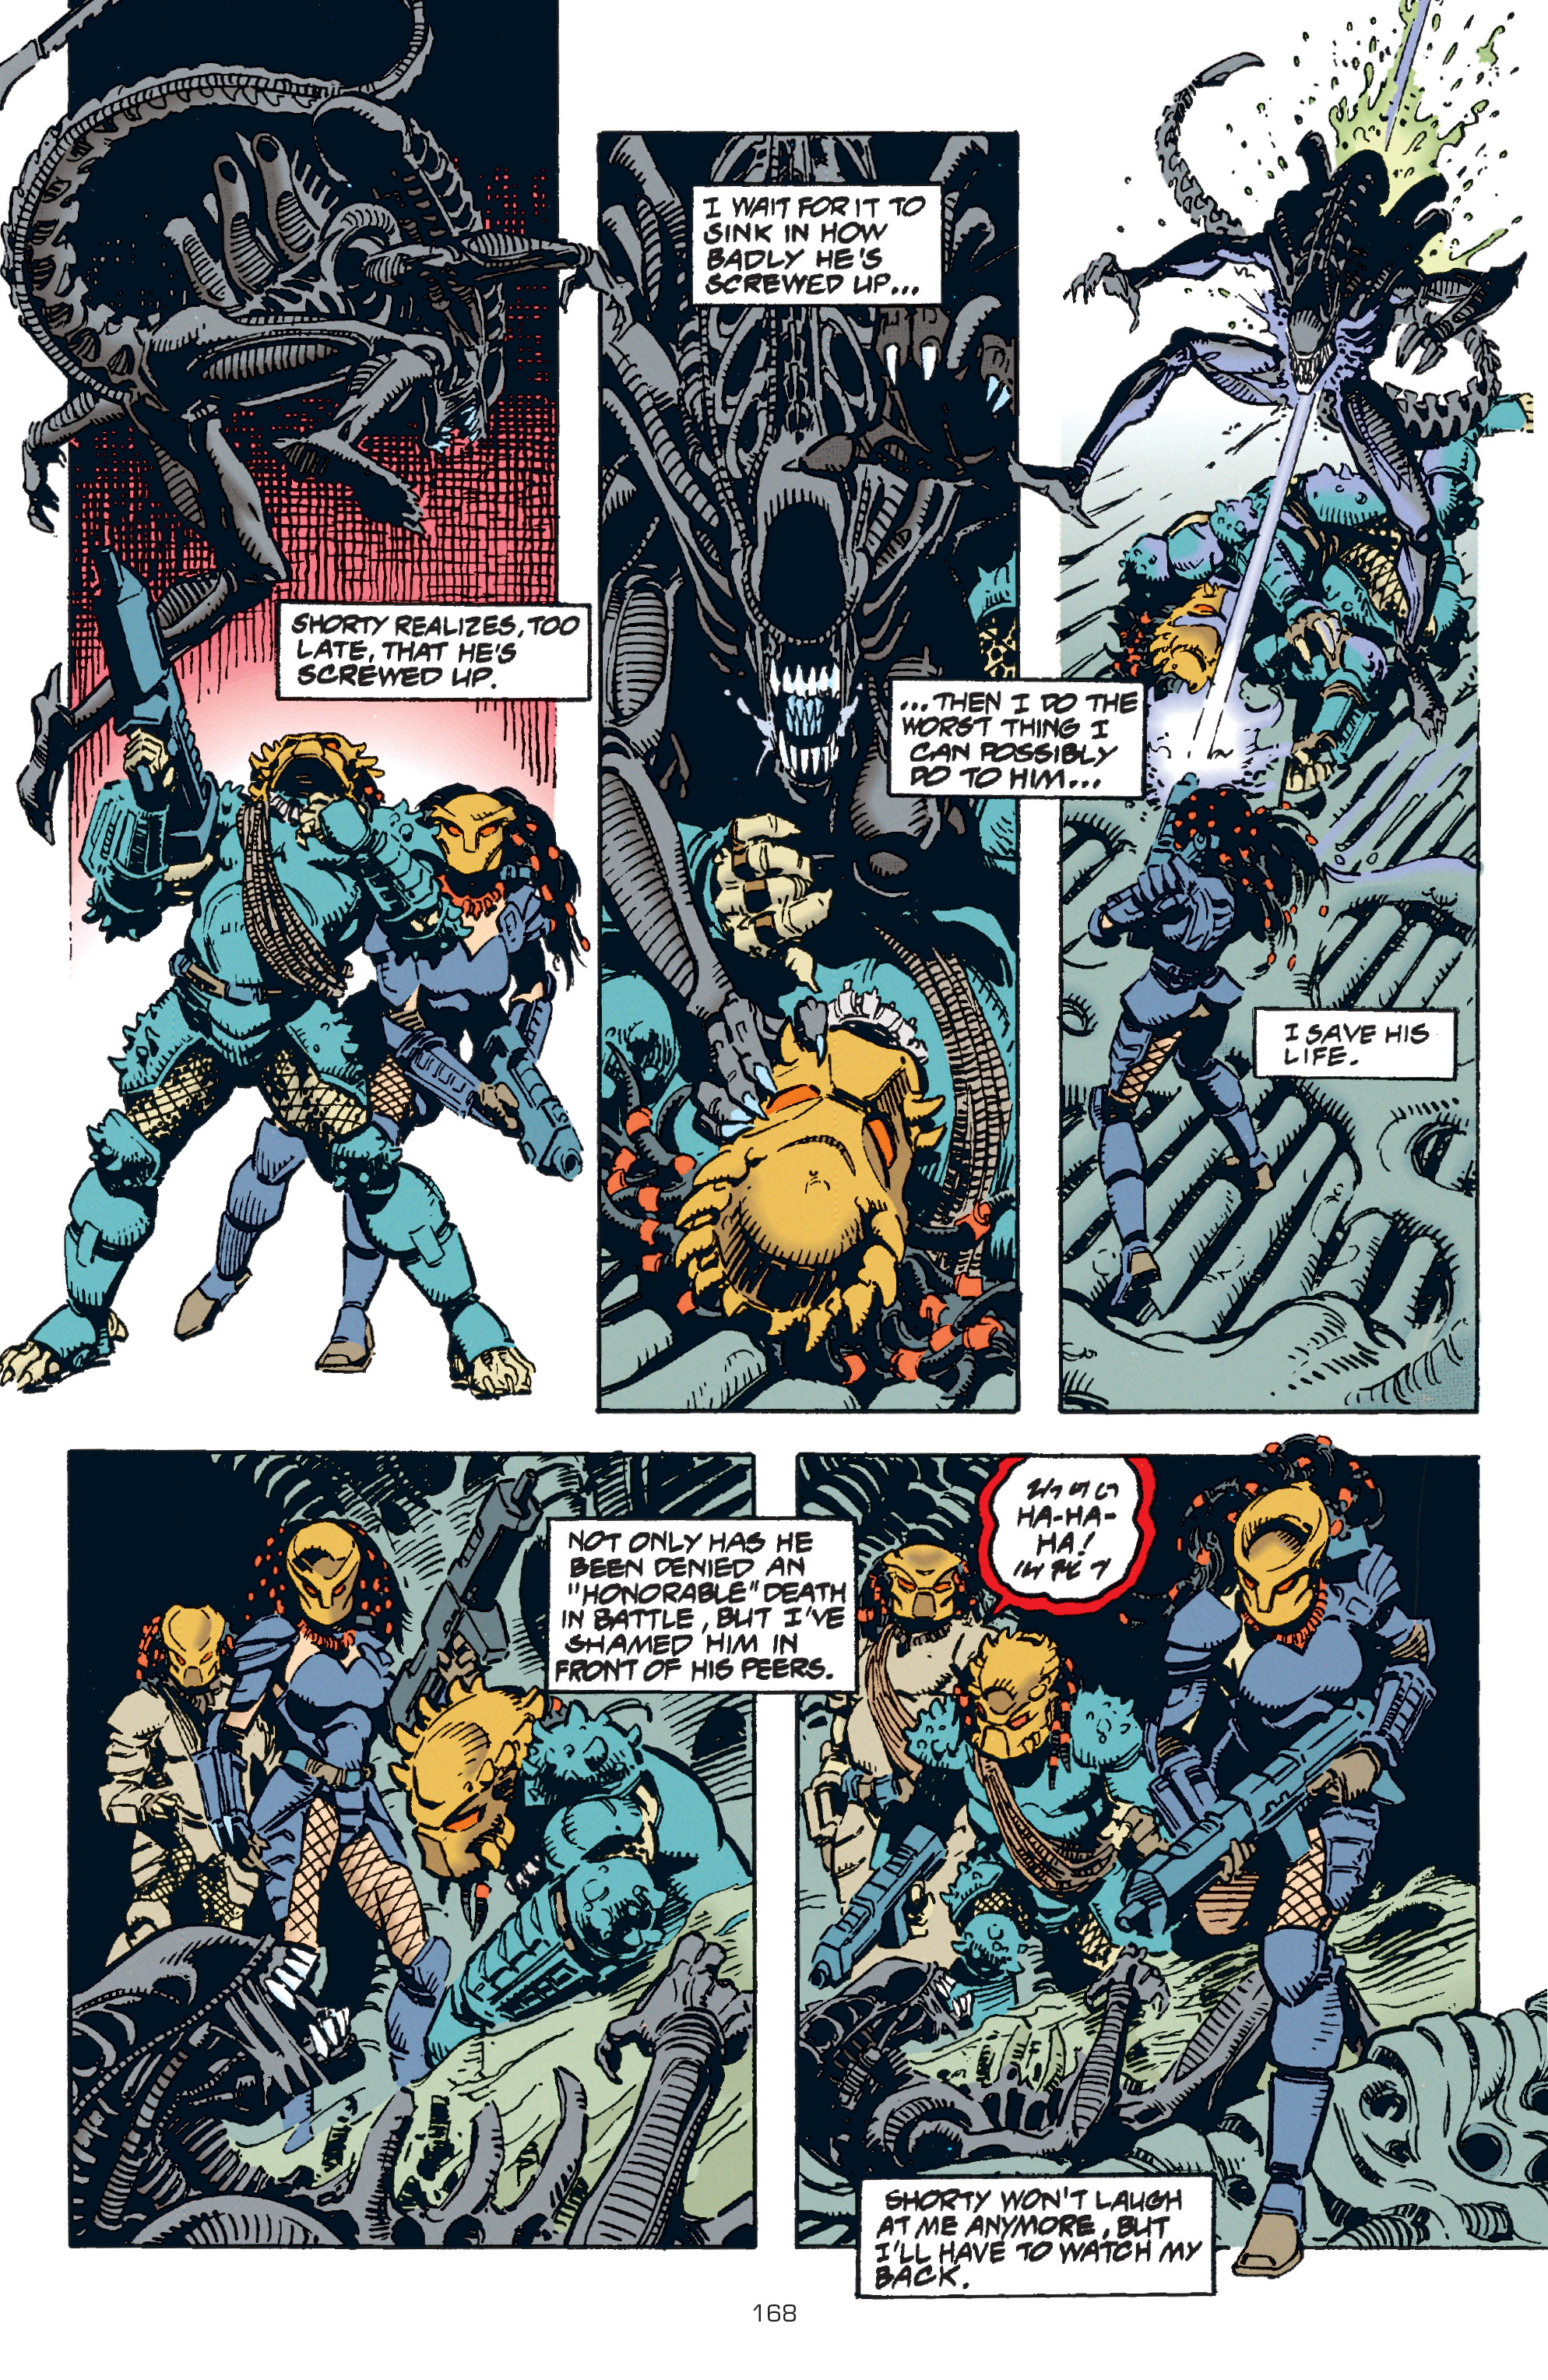 Aliens vs Predator Essential Comics TP Vol 02 (C: 0-1-2) - Discount Comic  Book Service